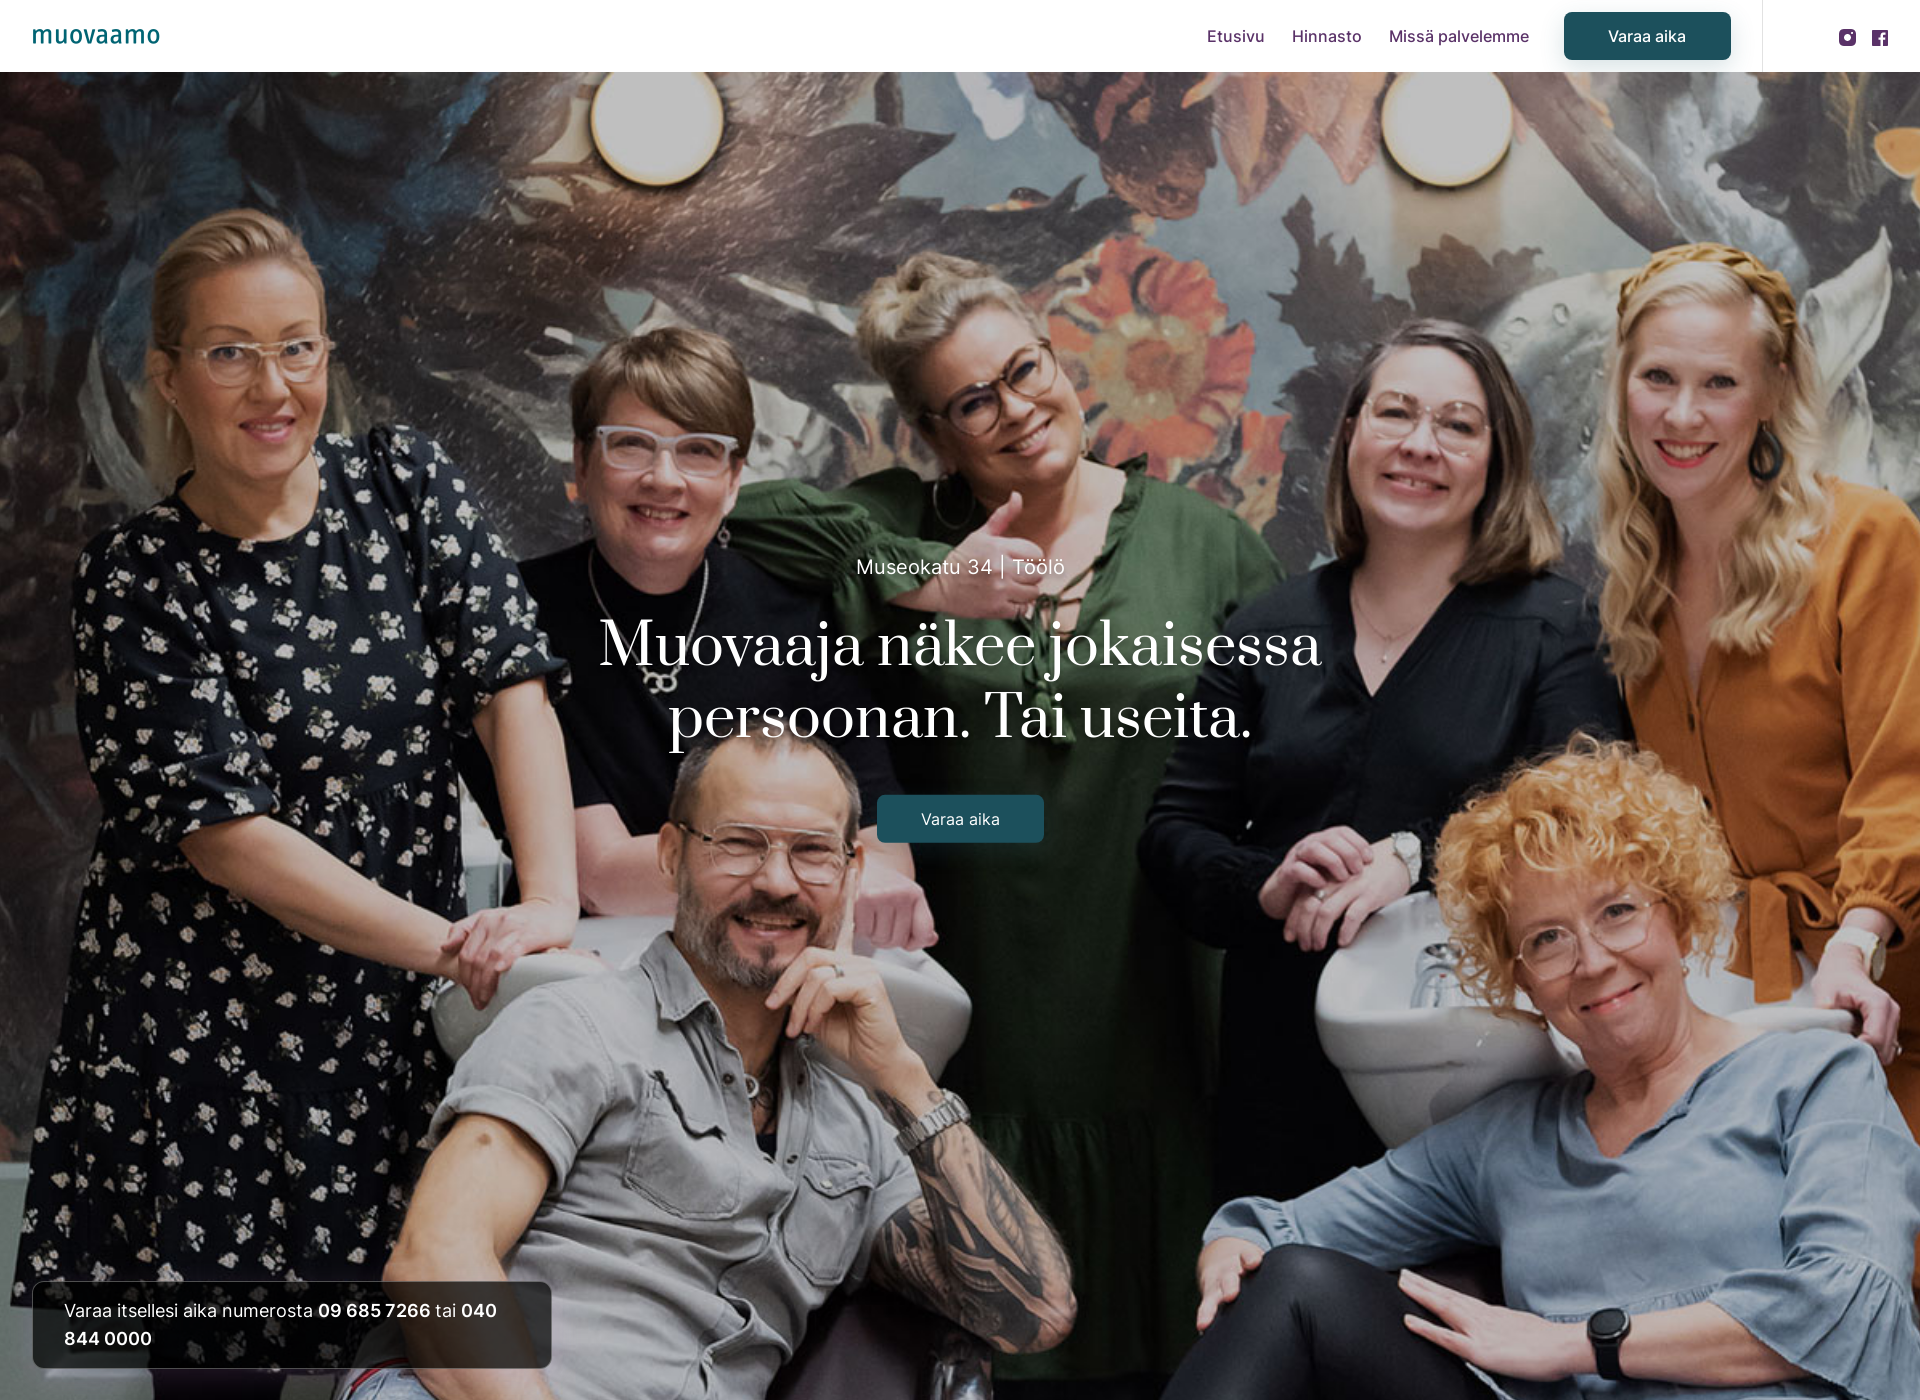 Screenshot for muovaamo.fi